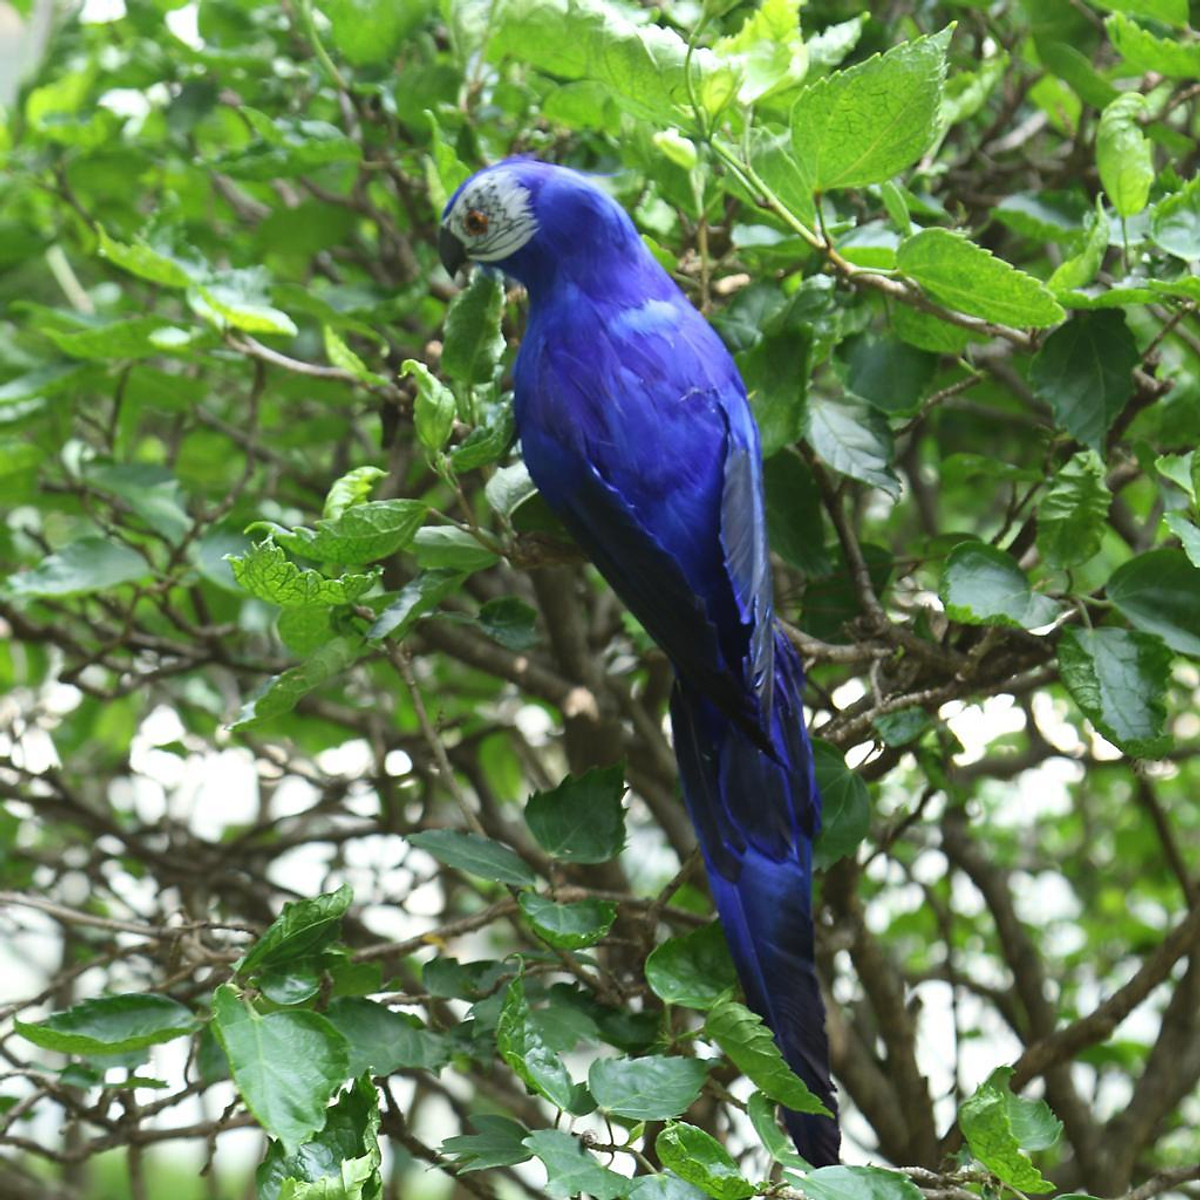 2x True to Nature Parrot Desktop Ornament Artificial Animal Bird Yellow Blue